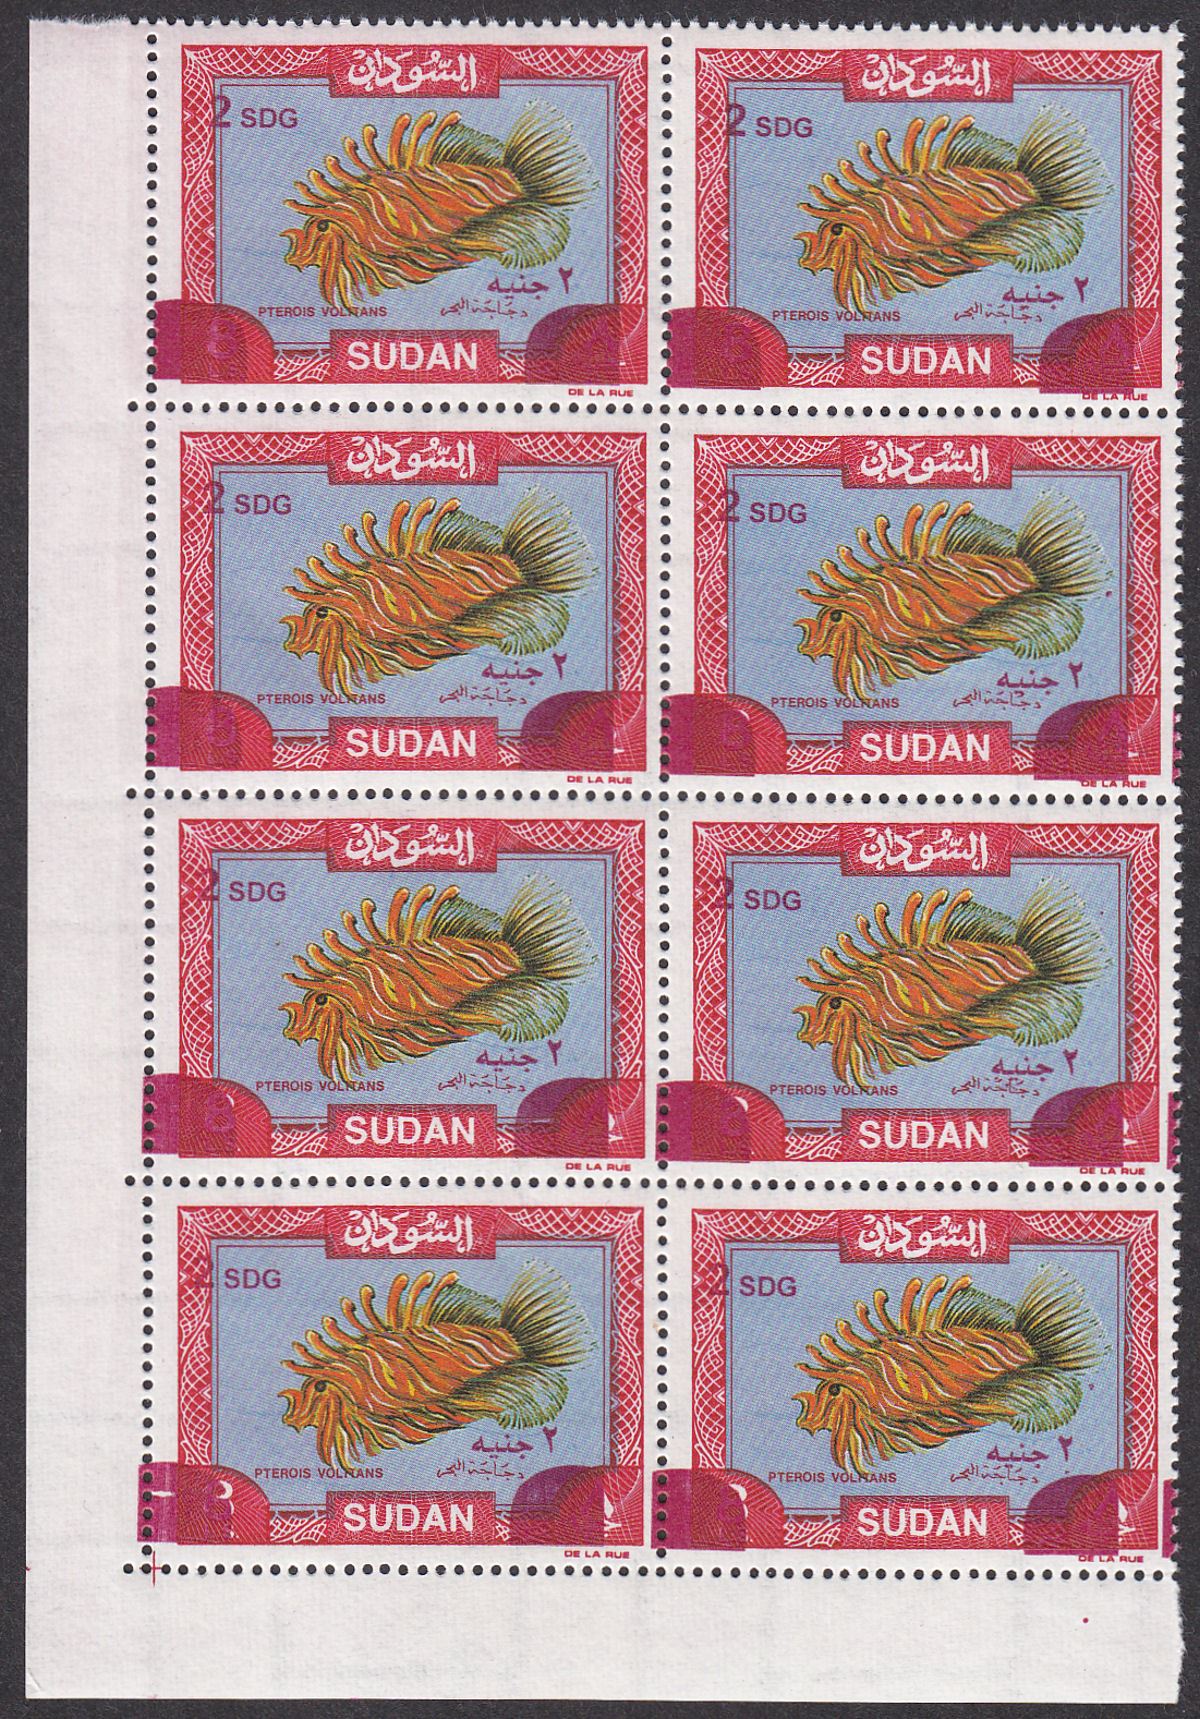 Sudan 2008 Lionfish 2sdg Red Surcharge on £S8 Block of 8 UM Mint SG683 cat £100